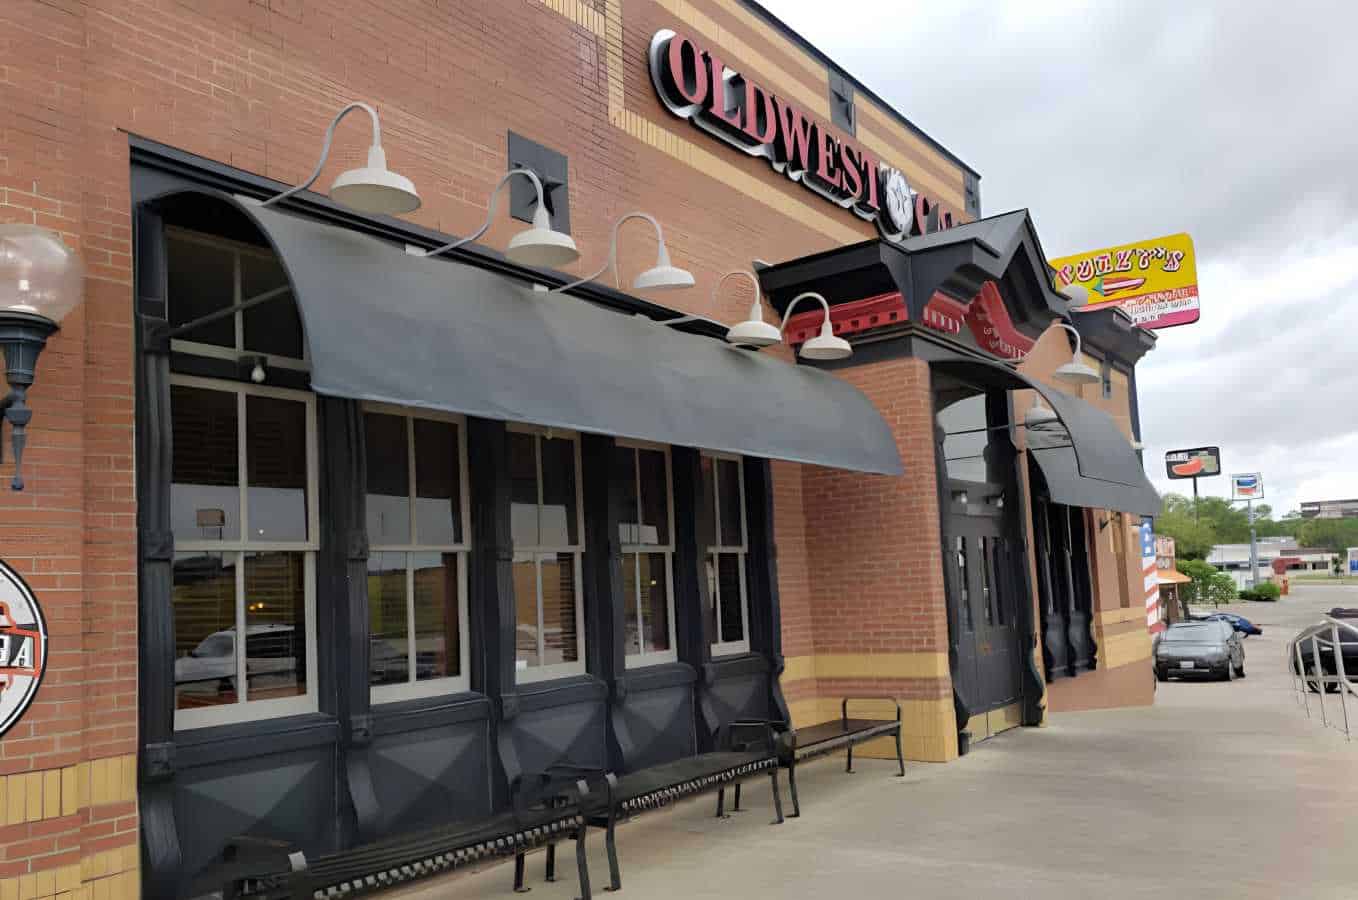 Oldwest Cafe of Denton Best Restaurants in Denton, TX